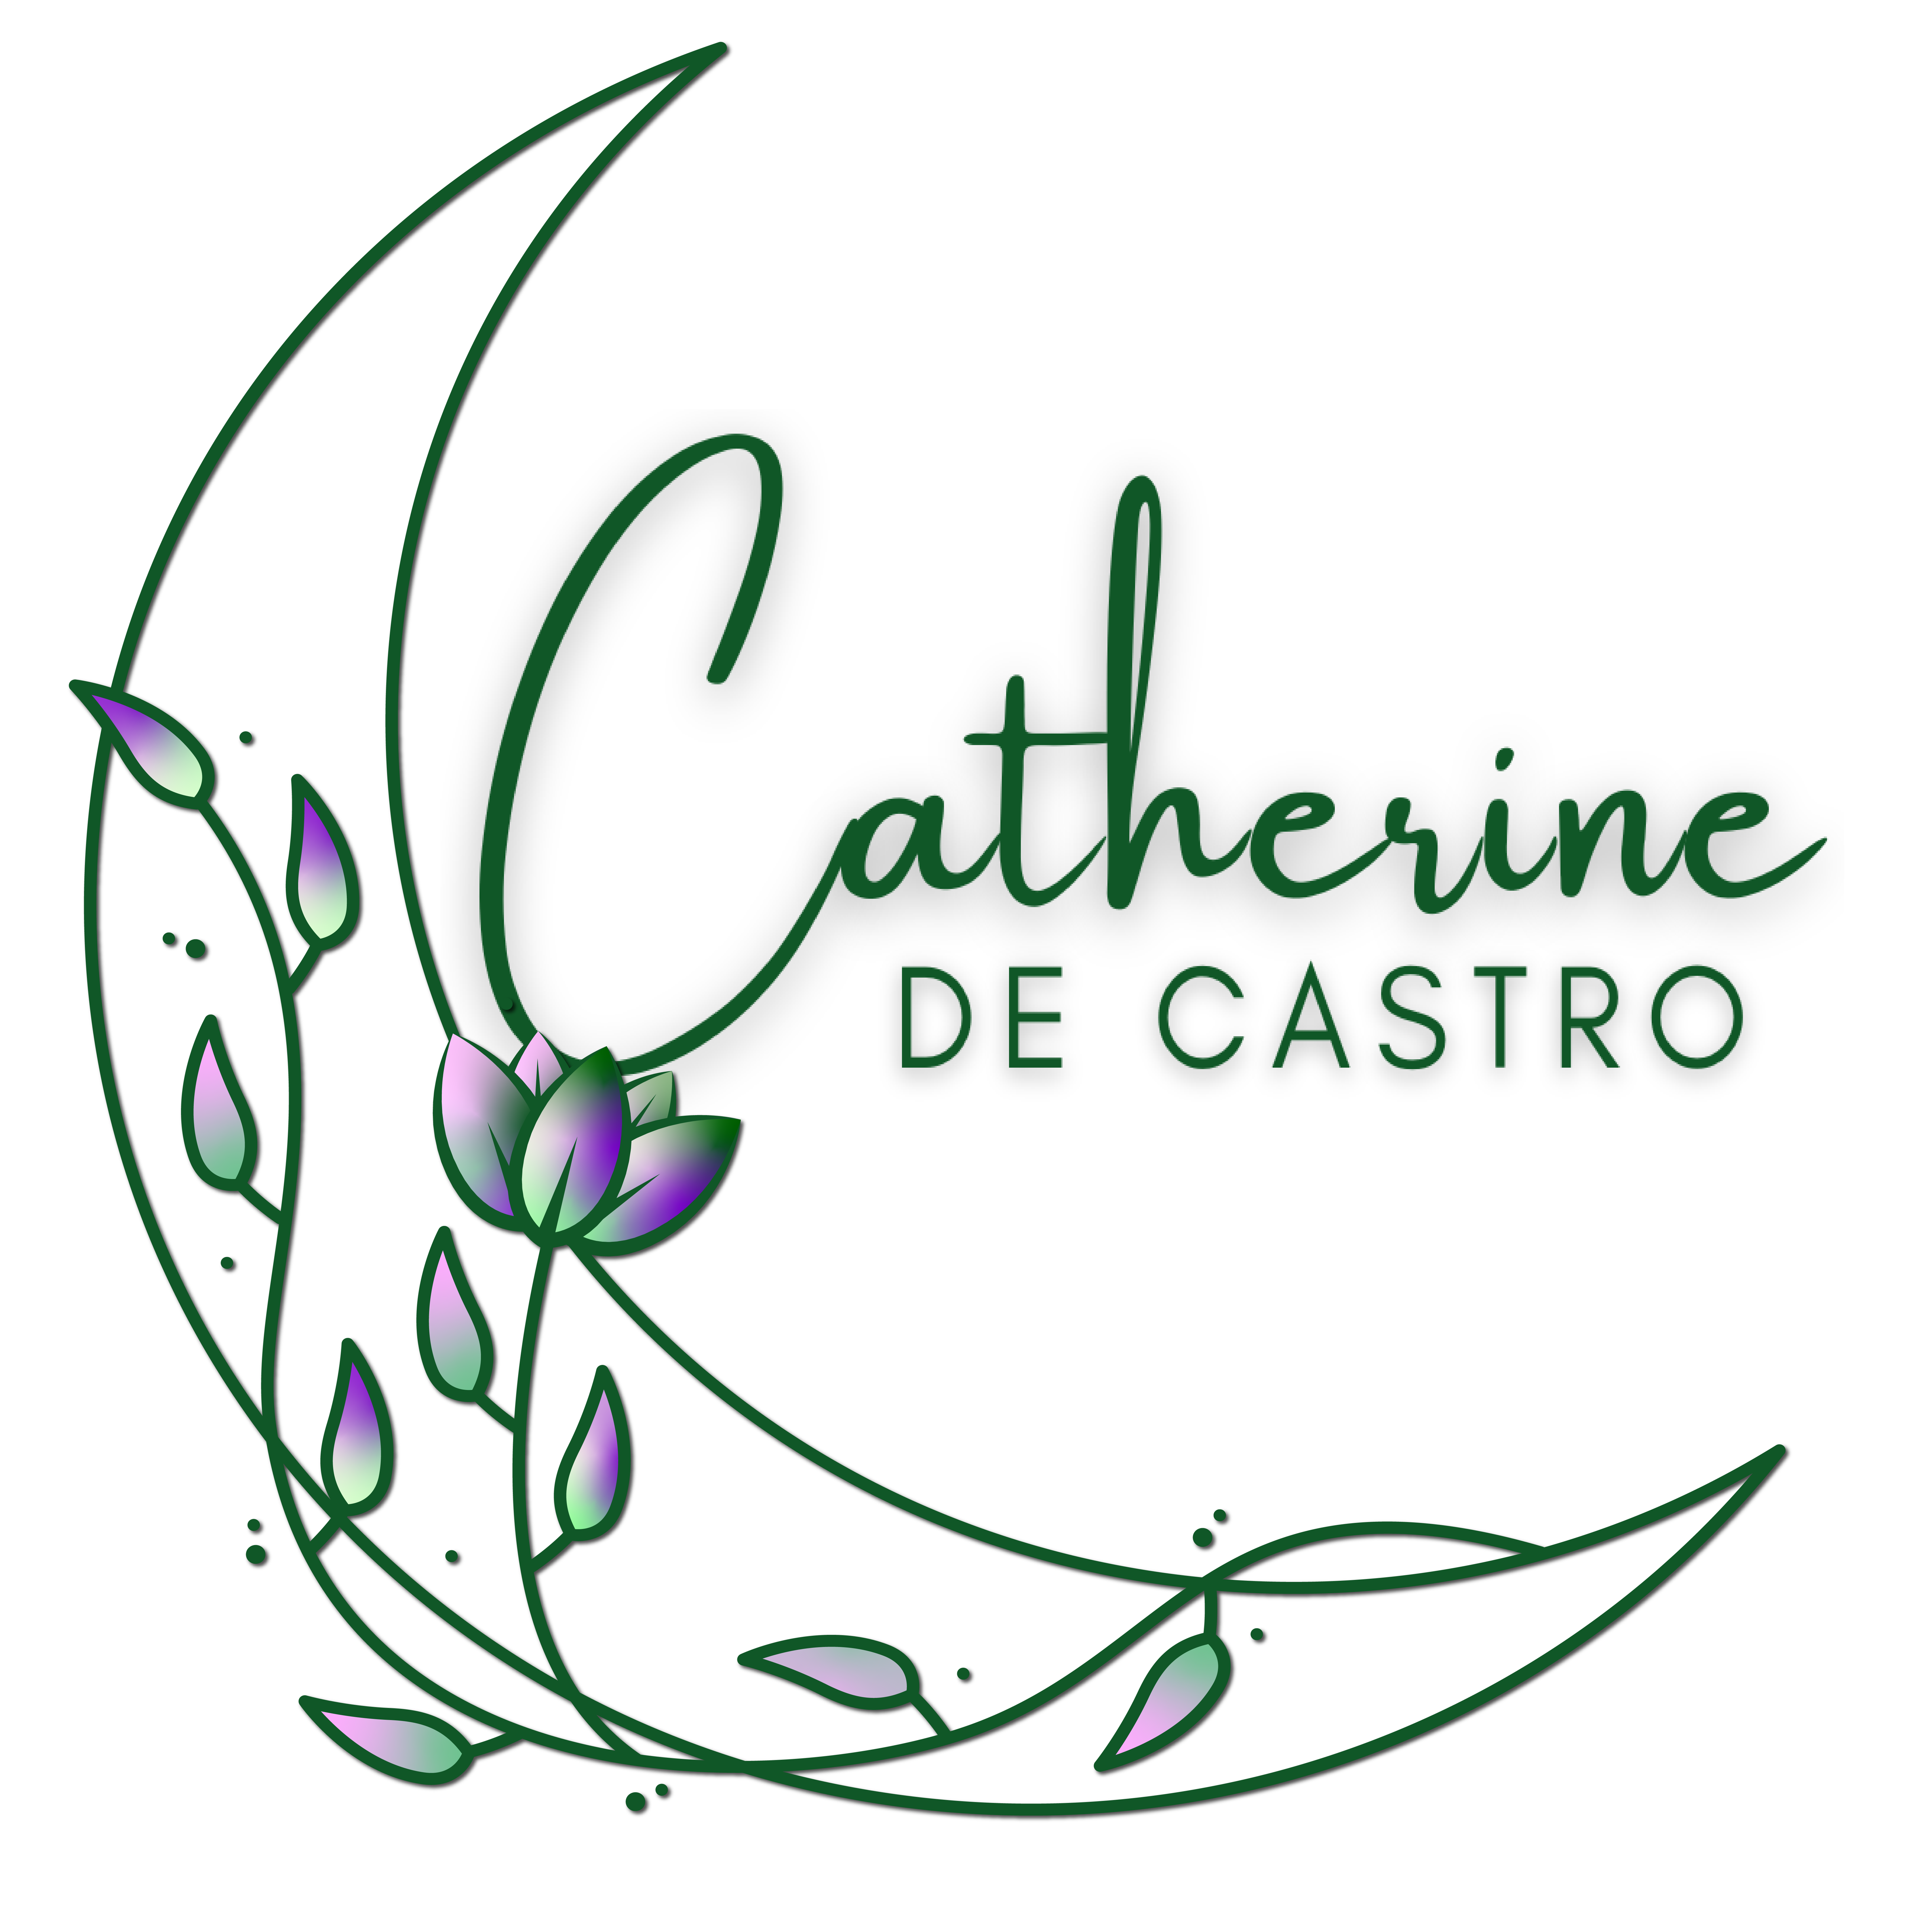 Catherine de Castro logo